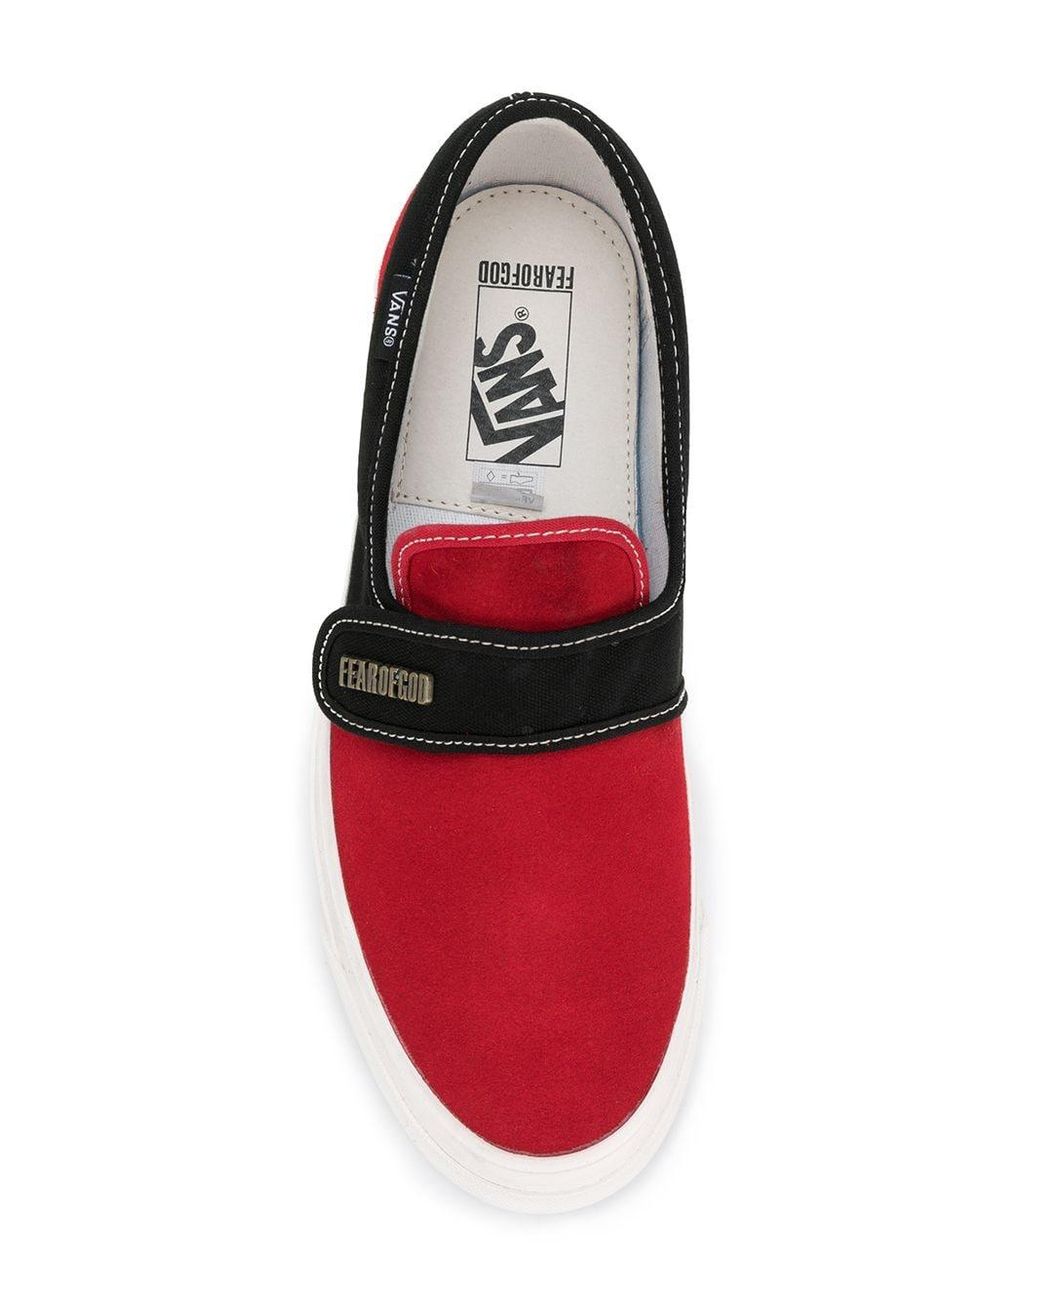 Vans Slip-on 47 'fear Of God' Shoes in Red/Black (Red) for Men - Save 18% |  Lyst